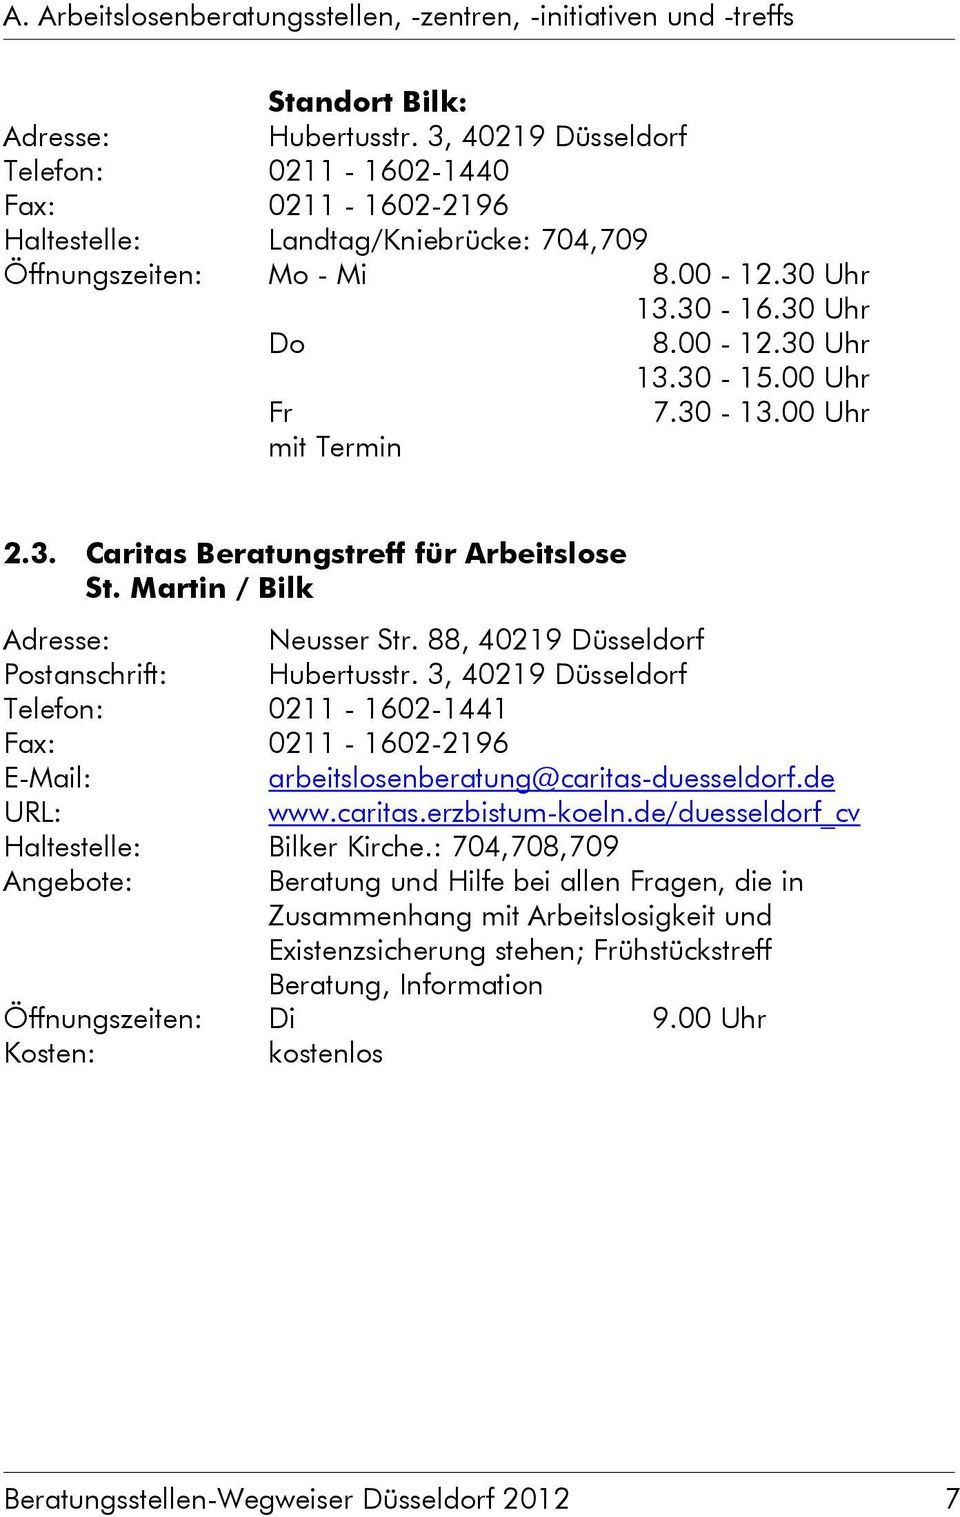 Martin / Bilk Neusser Str. 88, 40219 Düsseldorf Postanschrift: Hubertusstr. 3, 40219 Düsseldorf Telefon: 0211-1602-1441 Fax: 0211-1602-2196 arbeitslosenberatung@caritas-duesseldorf.de www.caritas.erzbistum-koeln.